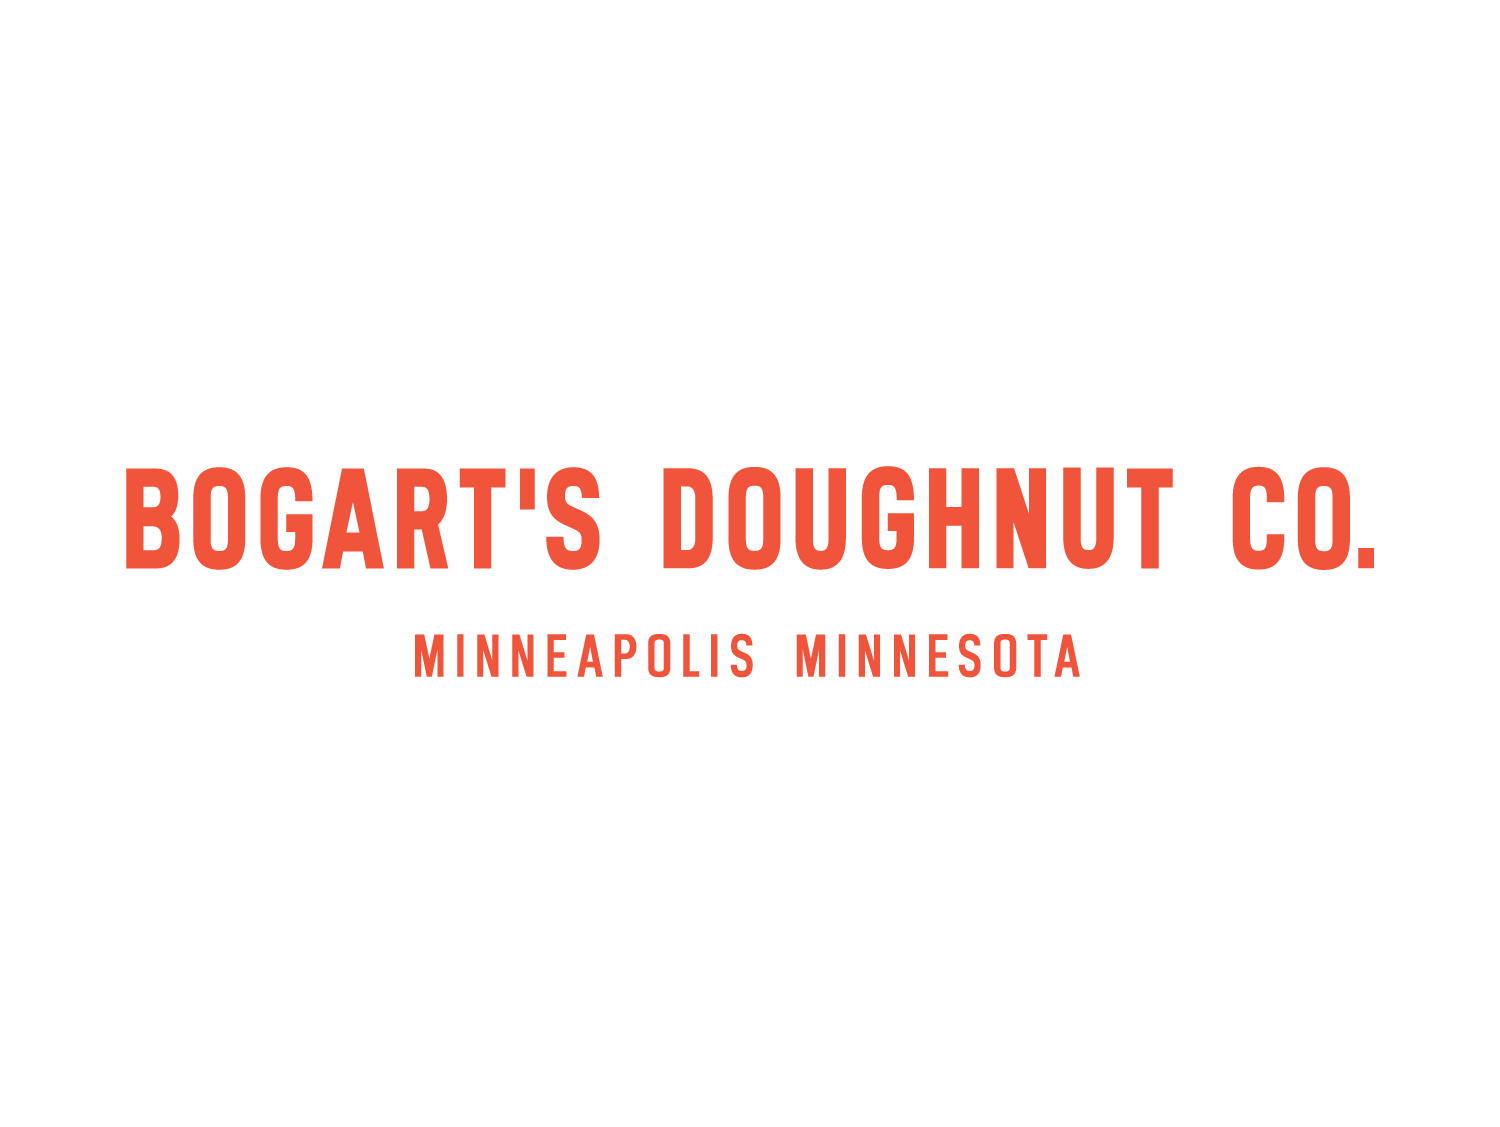 Bogarts-Doughnut-Co-logo-01.jpg